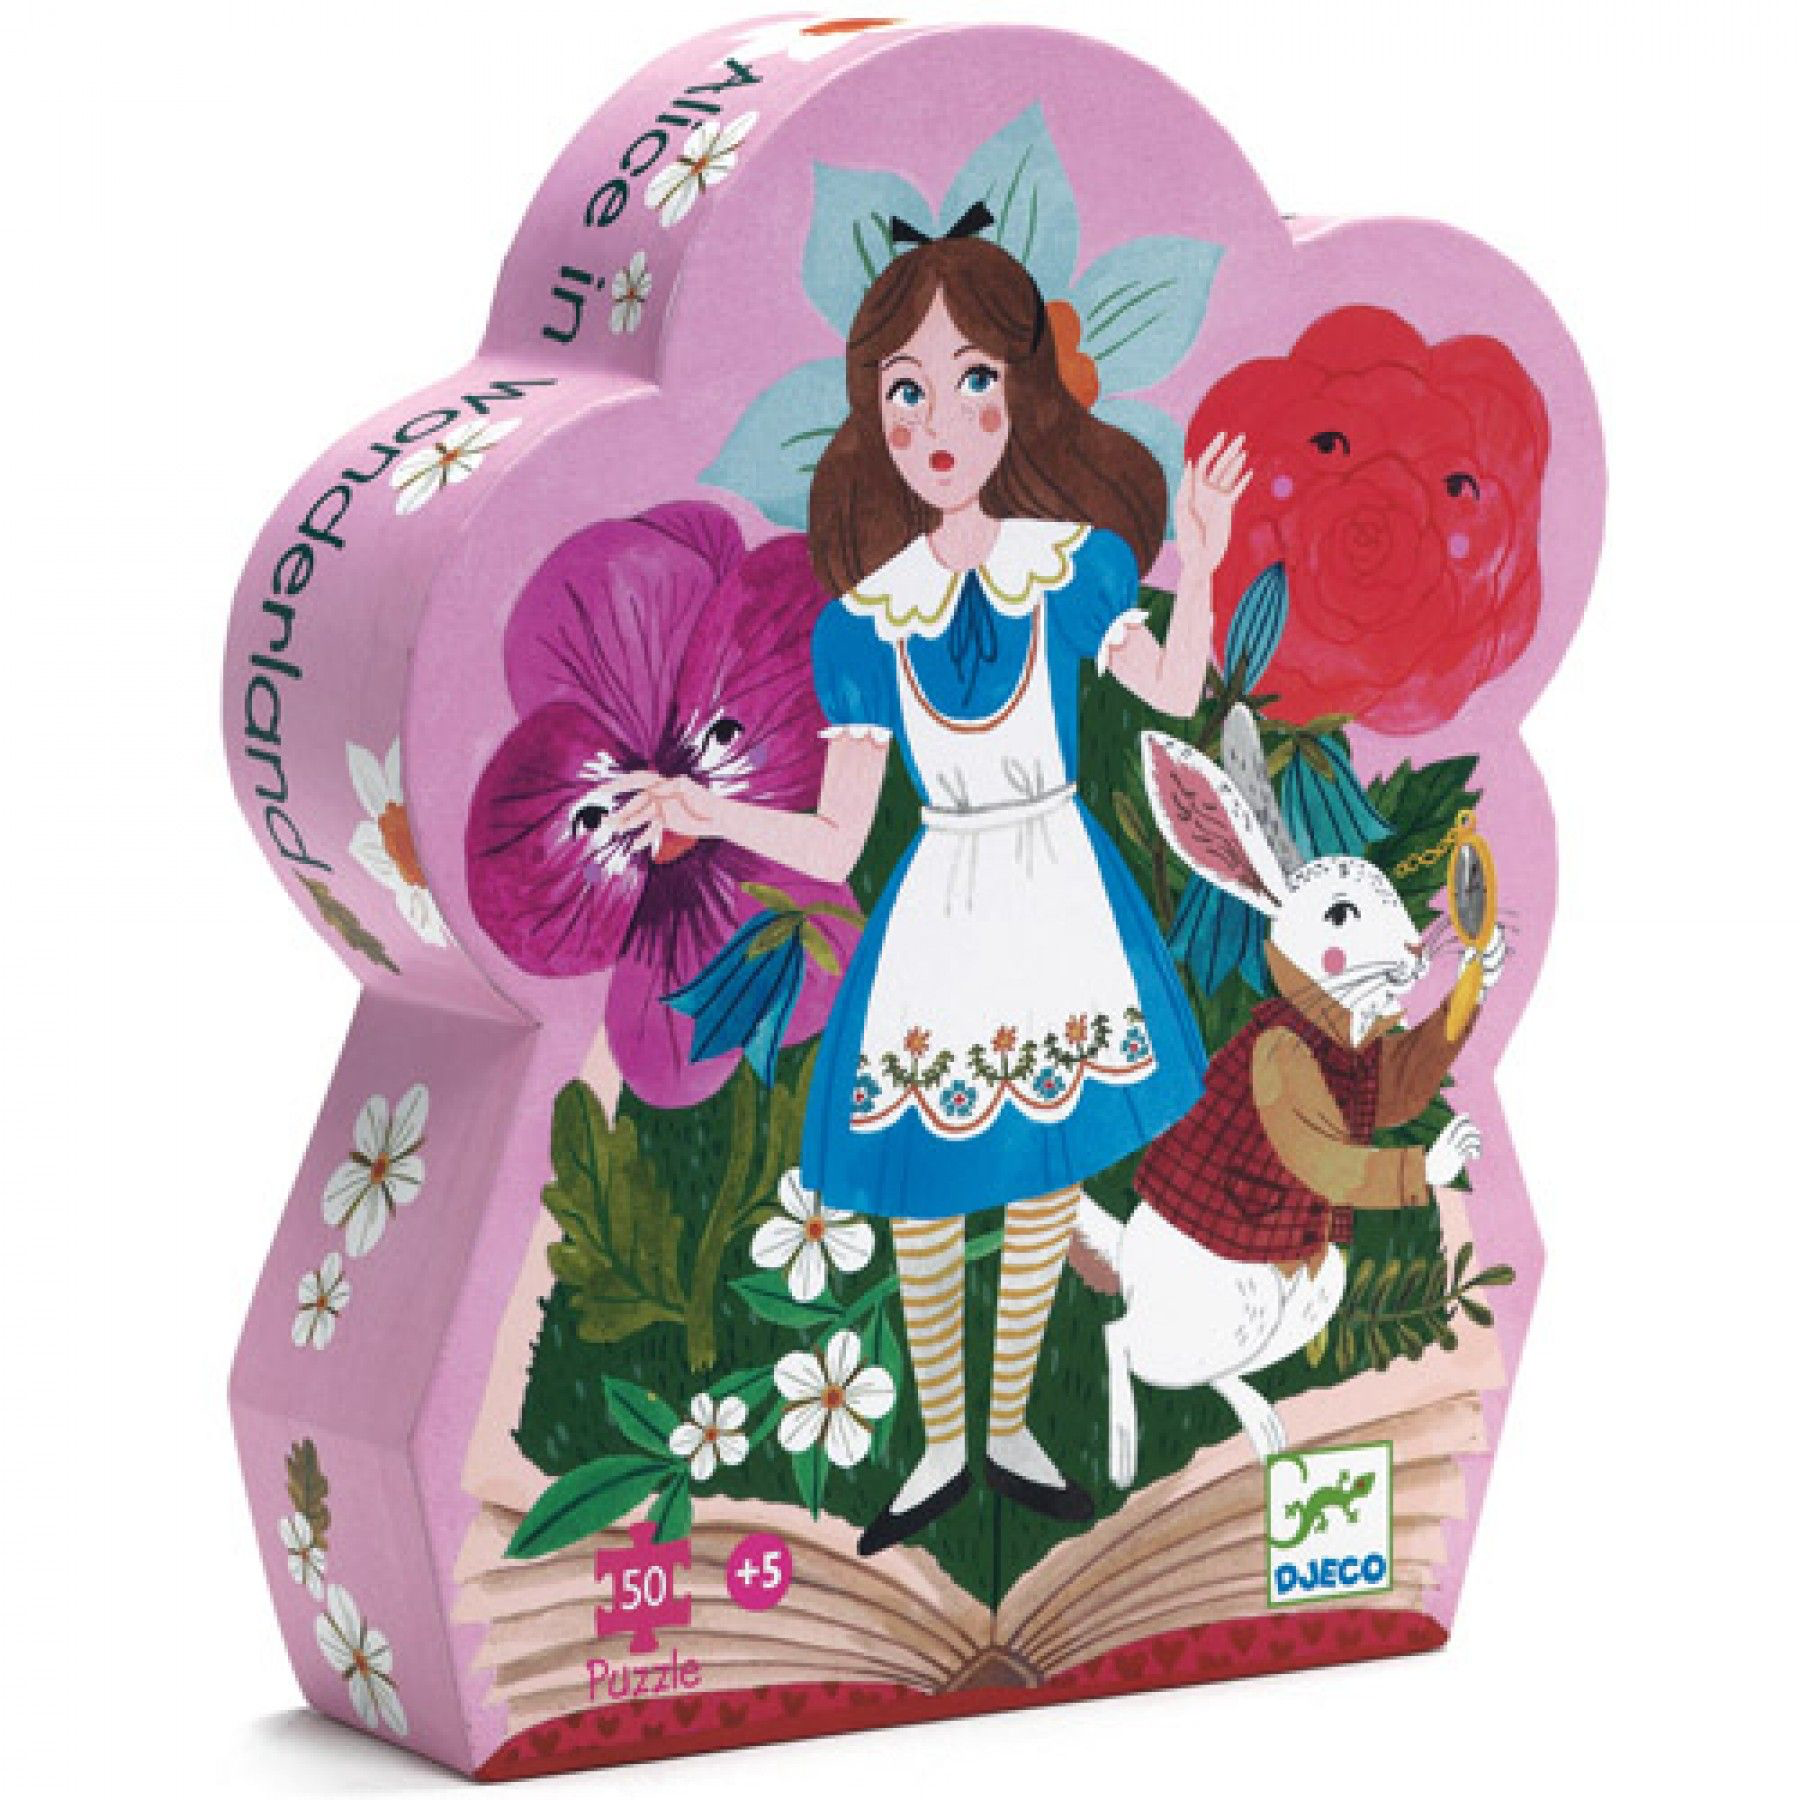 Djeco Djeco Puzzel - Alice in Wonderland 50pcs 5y+